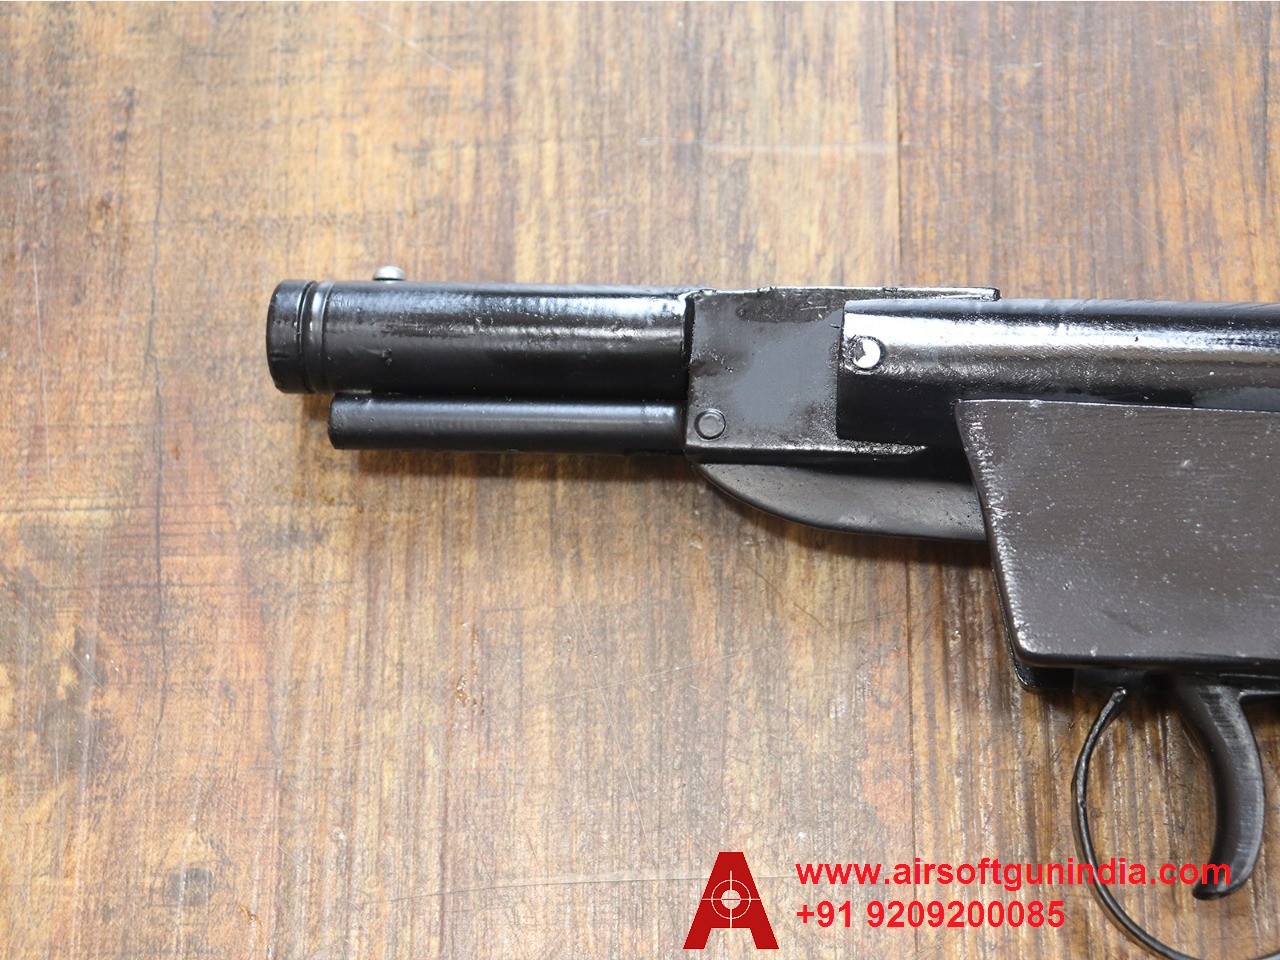 Bond Champion Black Single-Shot .177 Caliber / 4.5 Mm Indian Air Pistol By Airsoft Gun India.